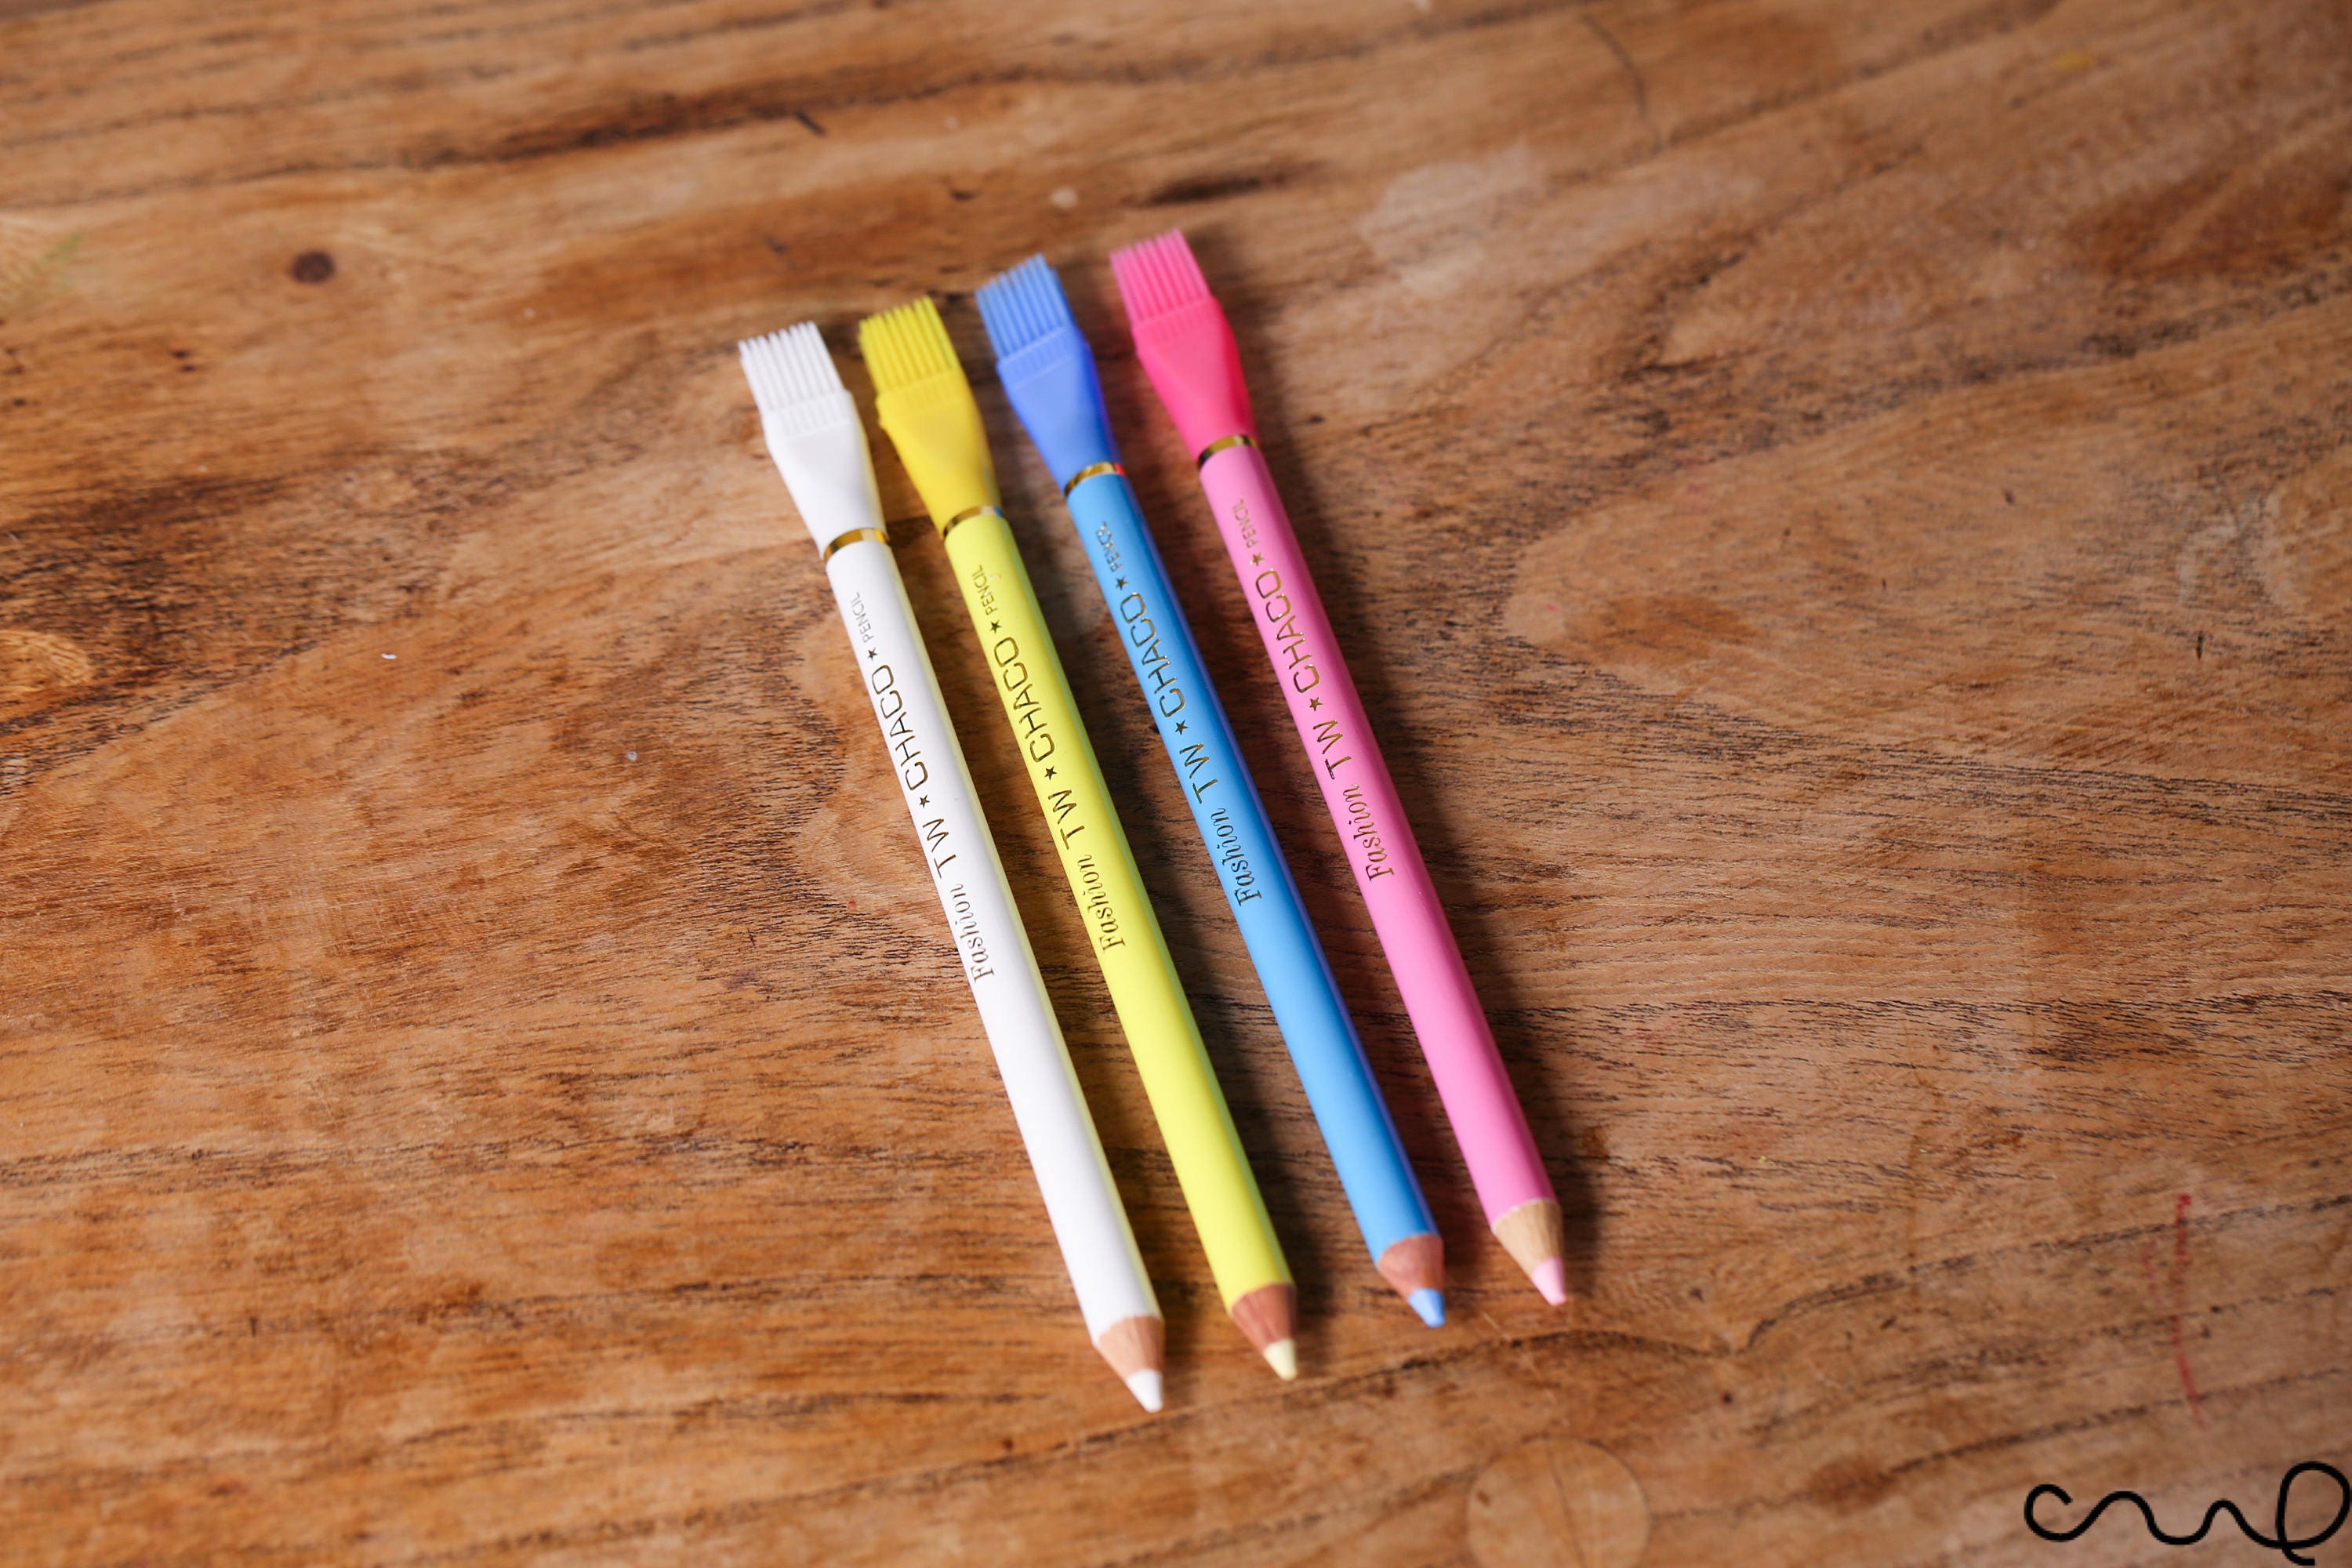 Fons & Porter Chalk Pencils